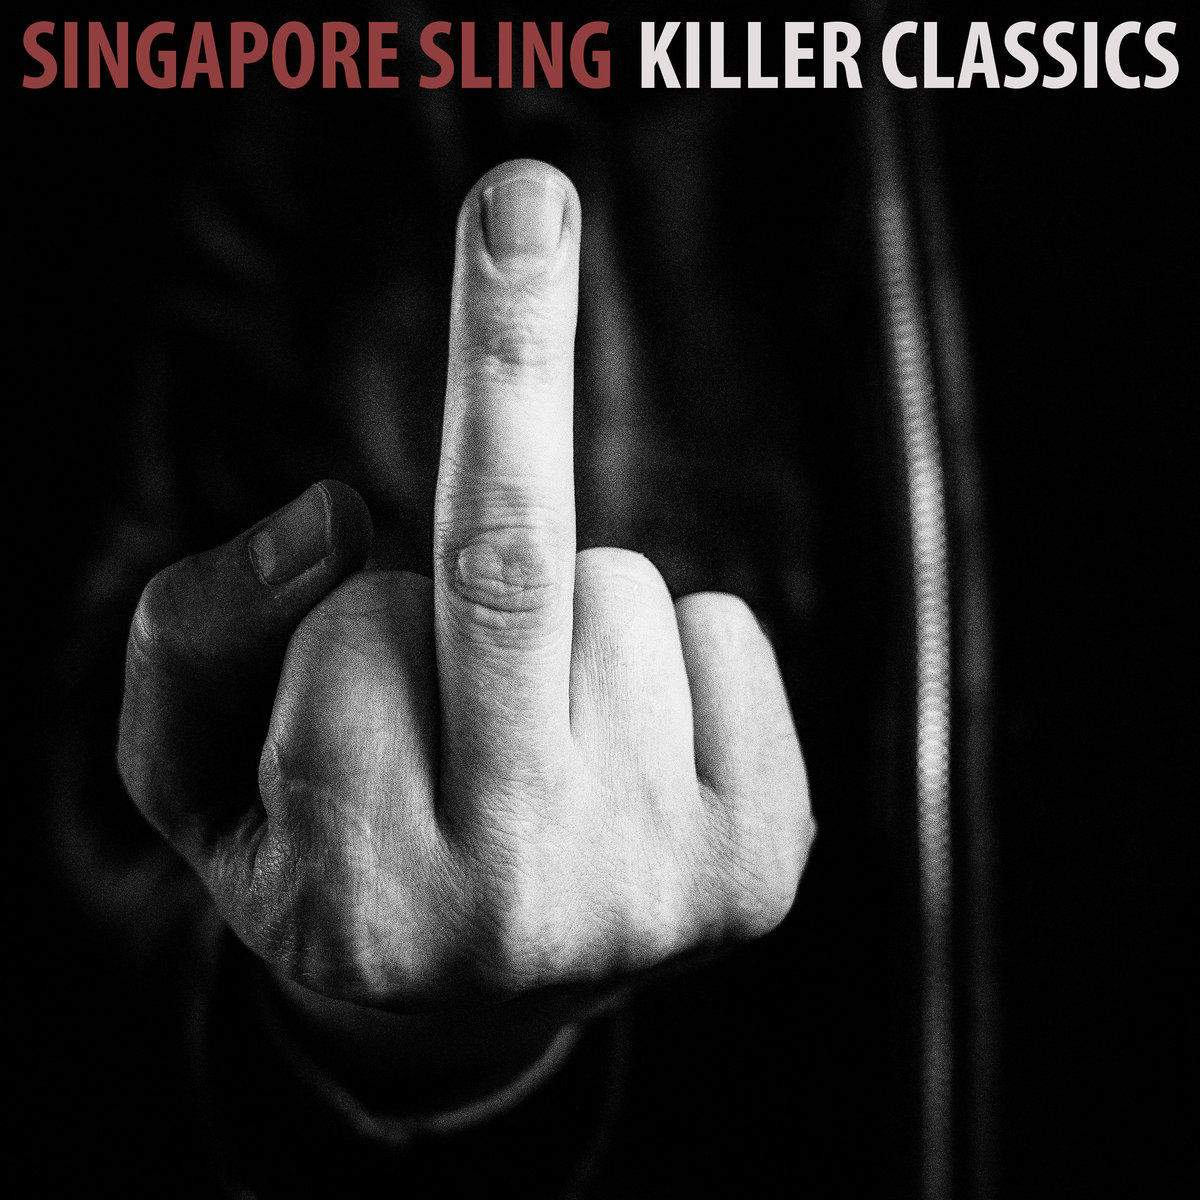 Singapore Sling cover